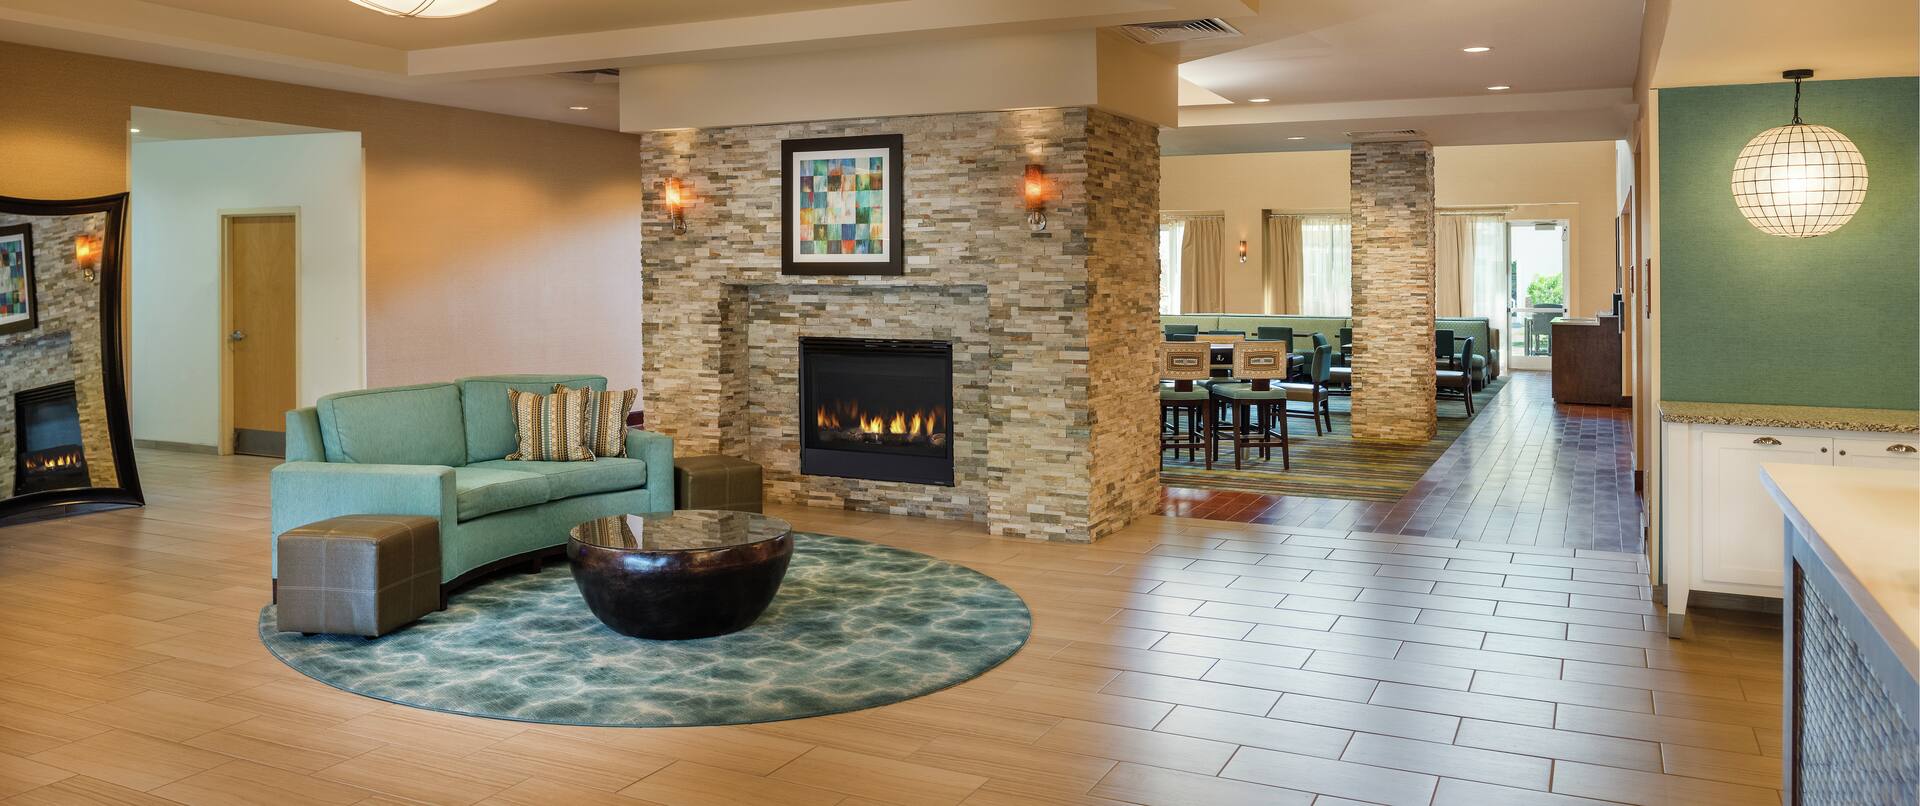 Spacious Lobby with Fireplace